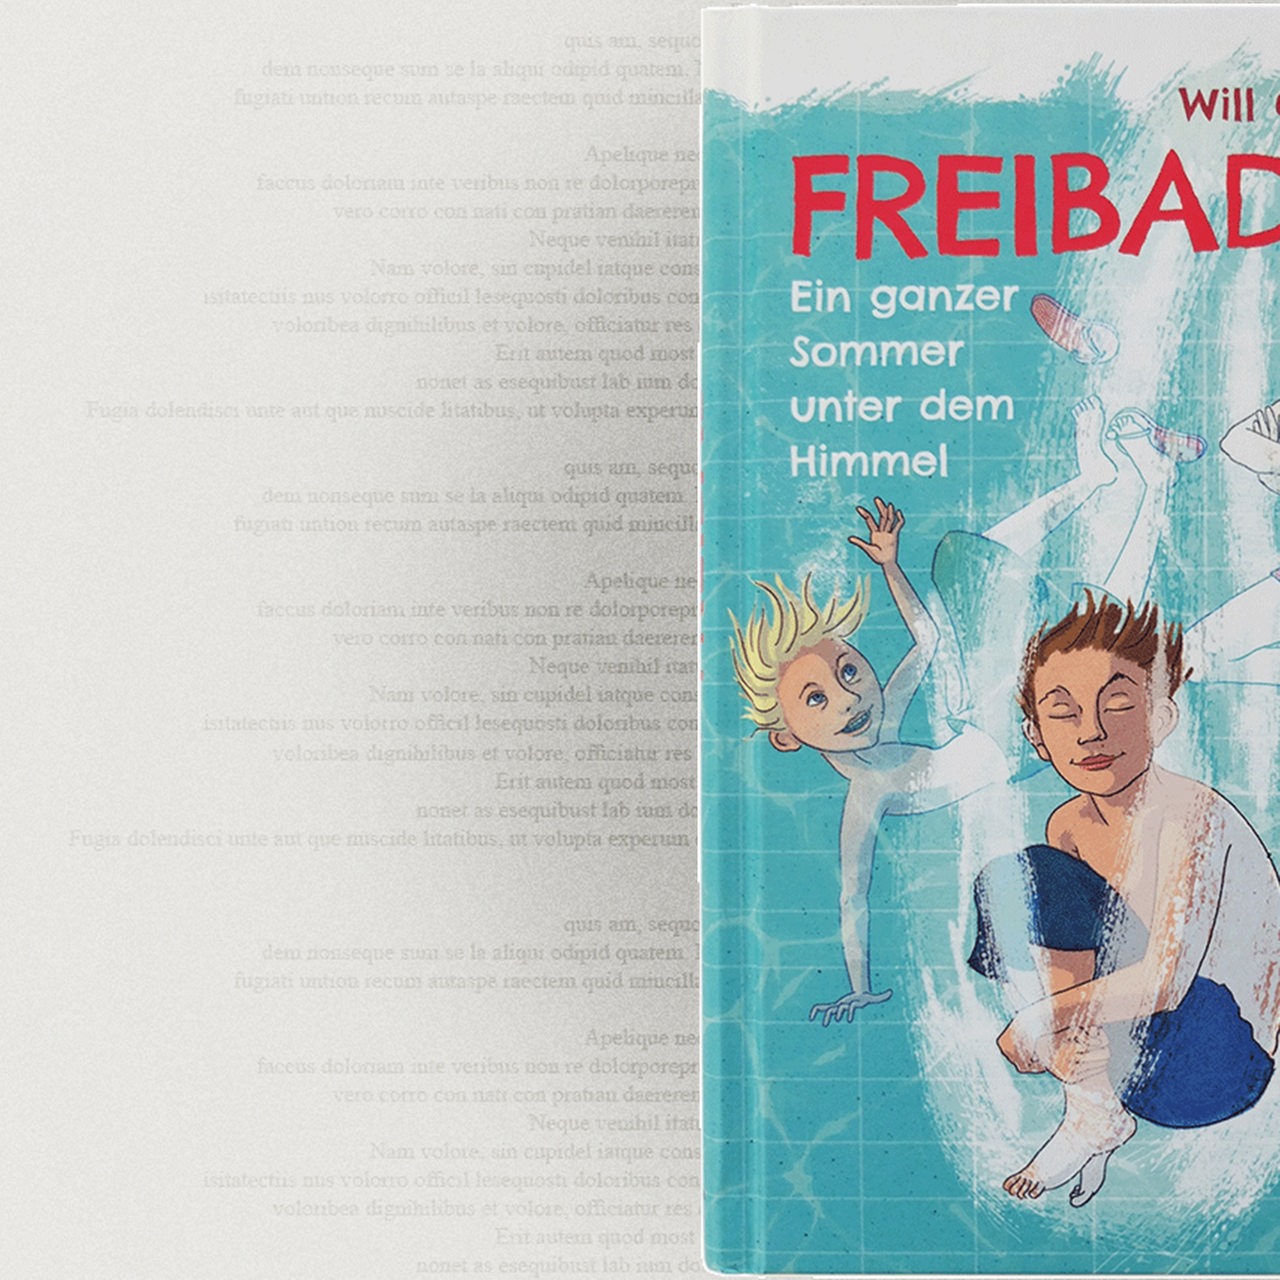 Cover: Will Gmehling, Freibad - Ein ganzer Sommer unter dem Himmel, Peter Hammer Verlag